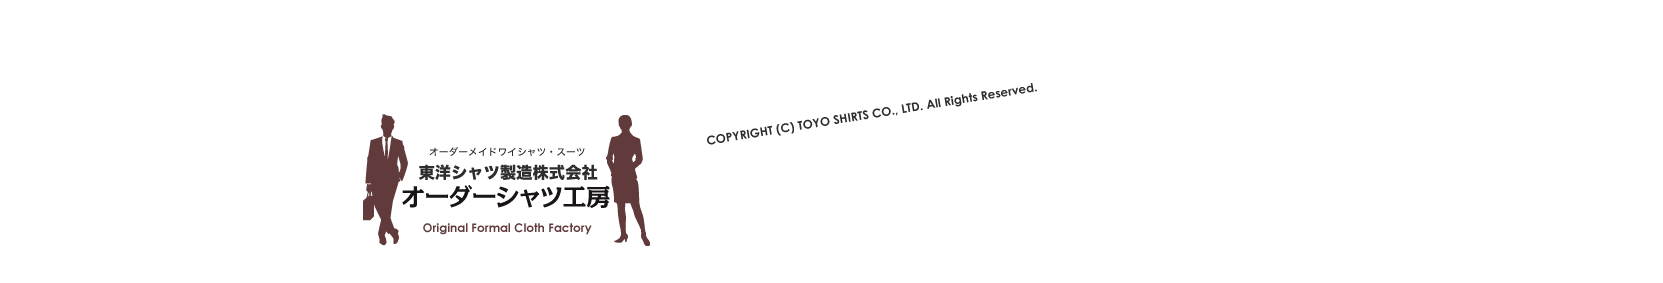 COPYRIGHT(C)TOYO SHIRTS CO., LTD. ALL Rights Reserced.